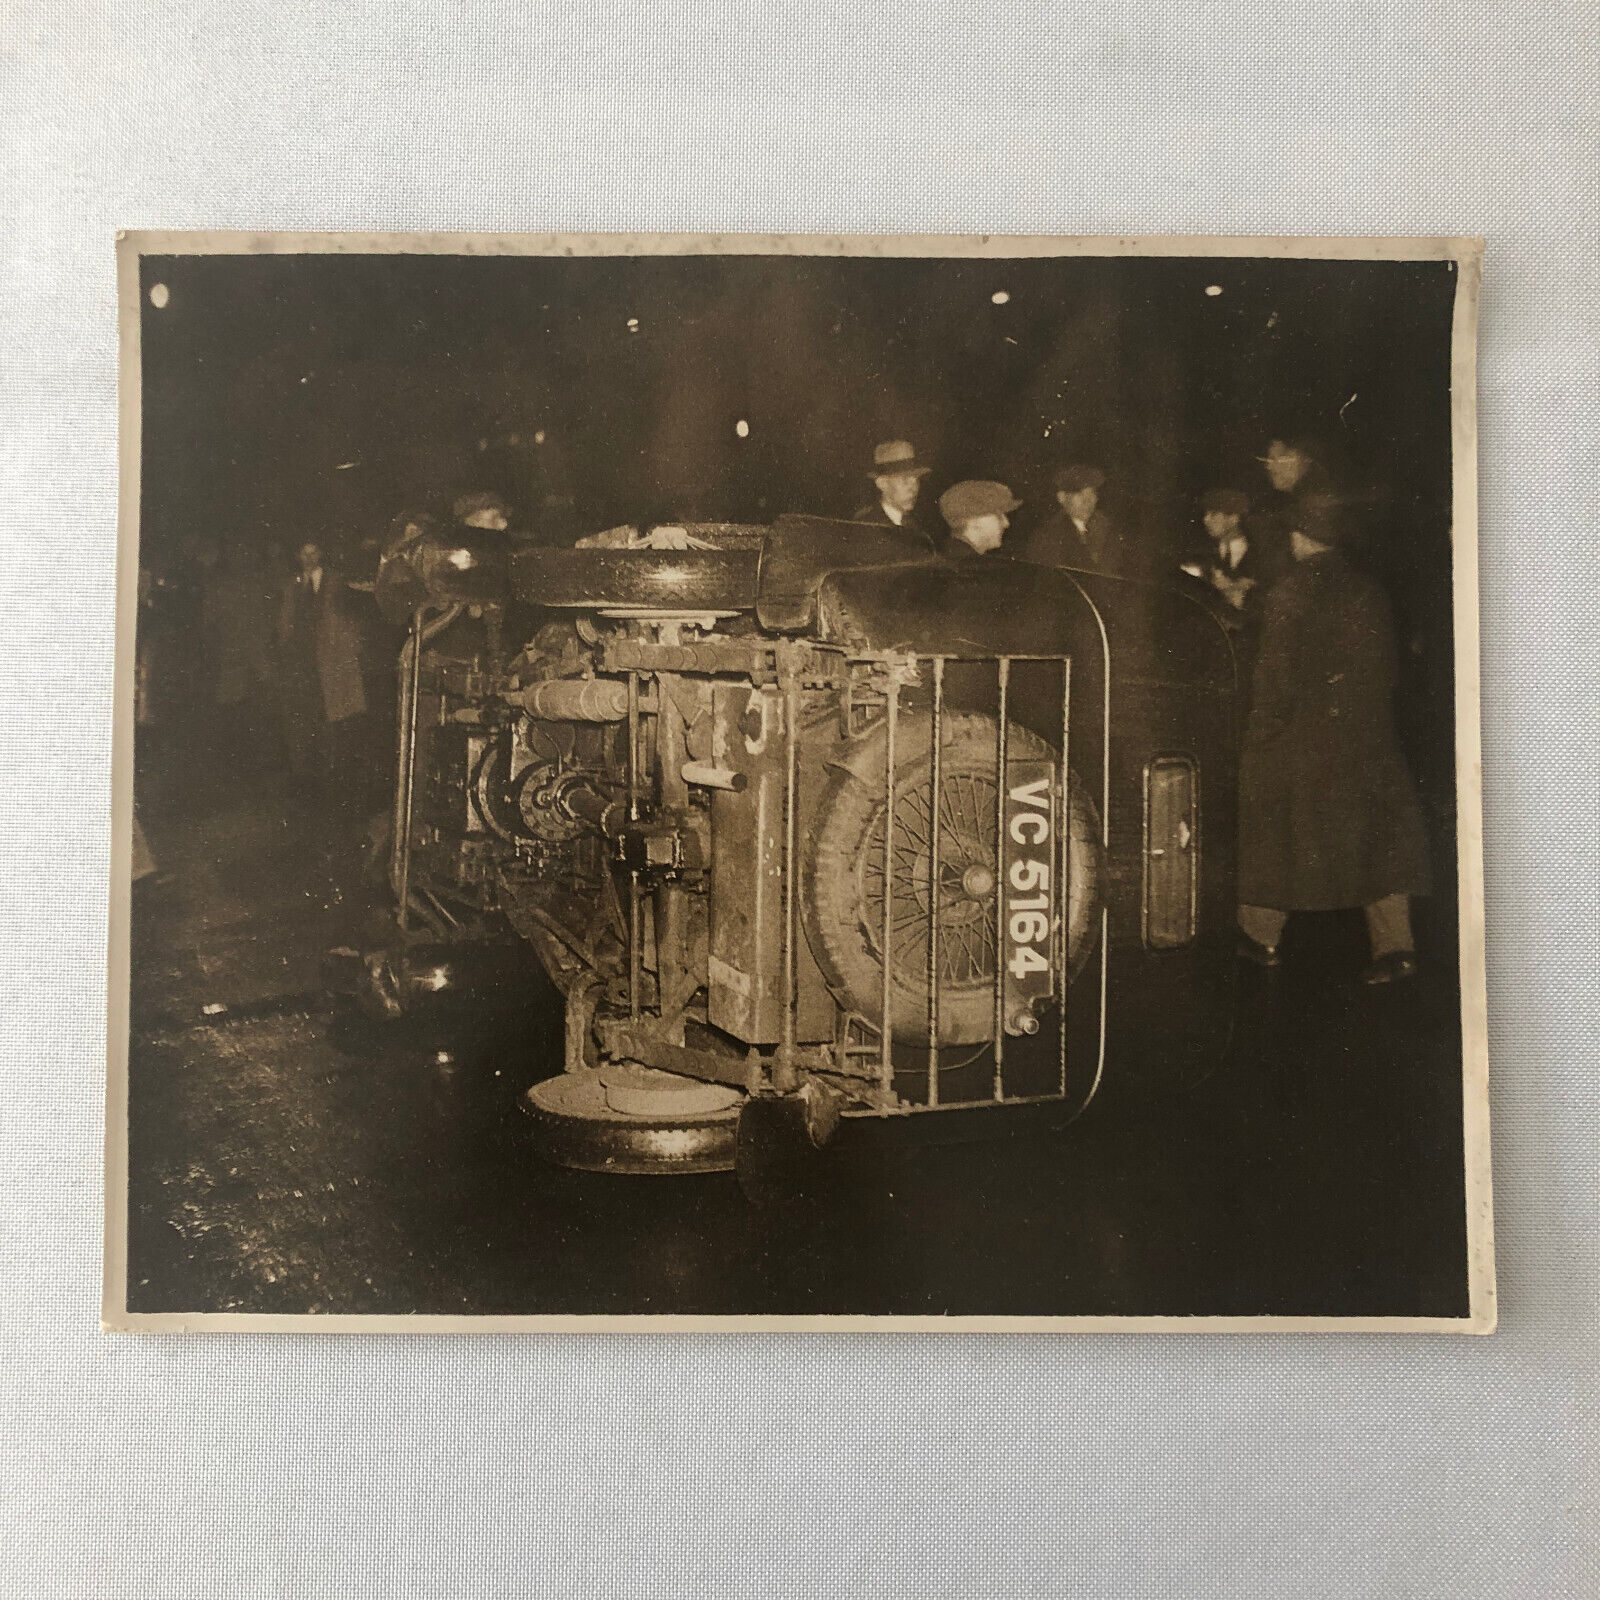 Press Photo Photograph Rioters Overturn Car Automobile 1932 London Keystone